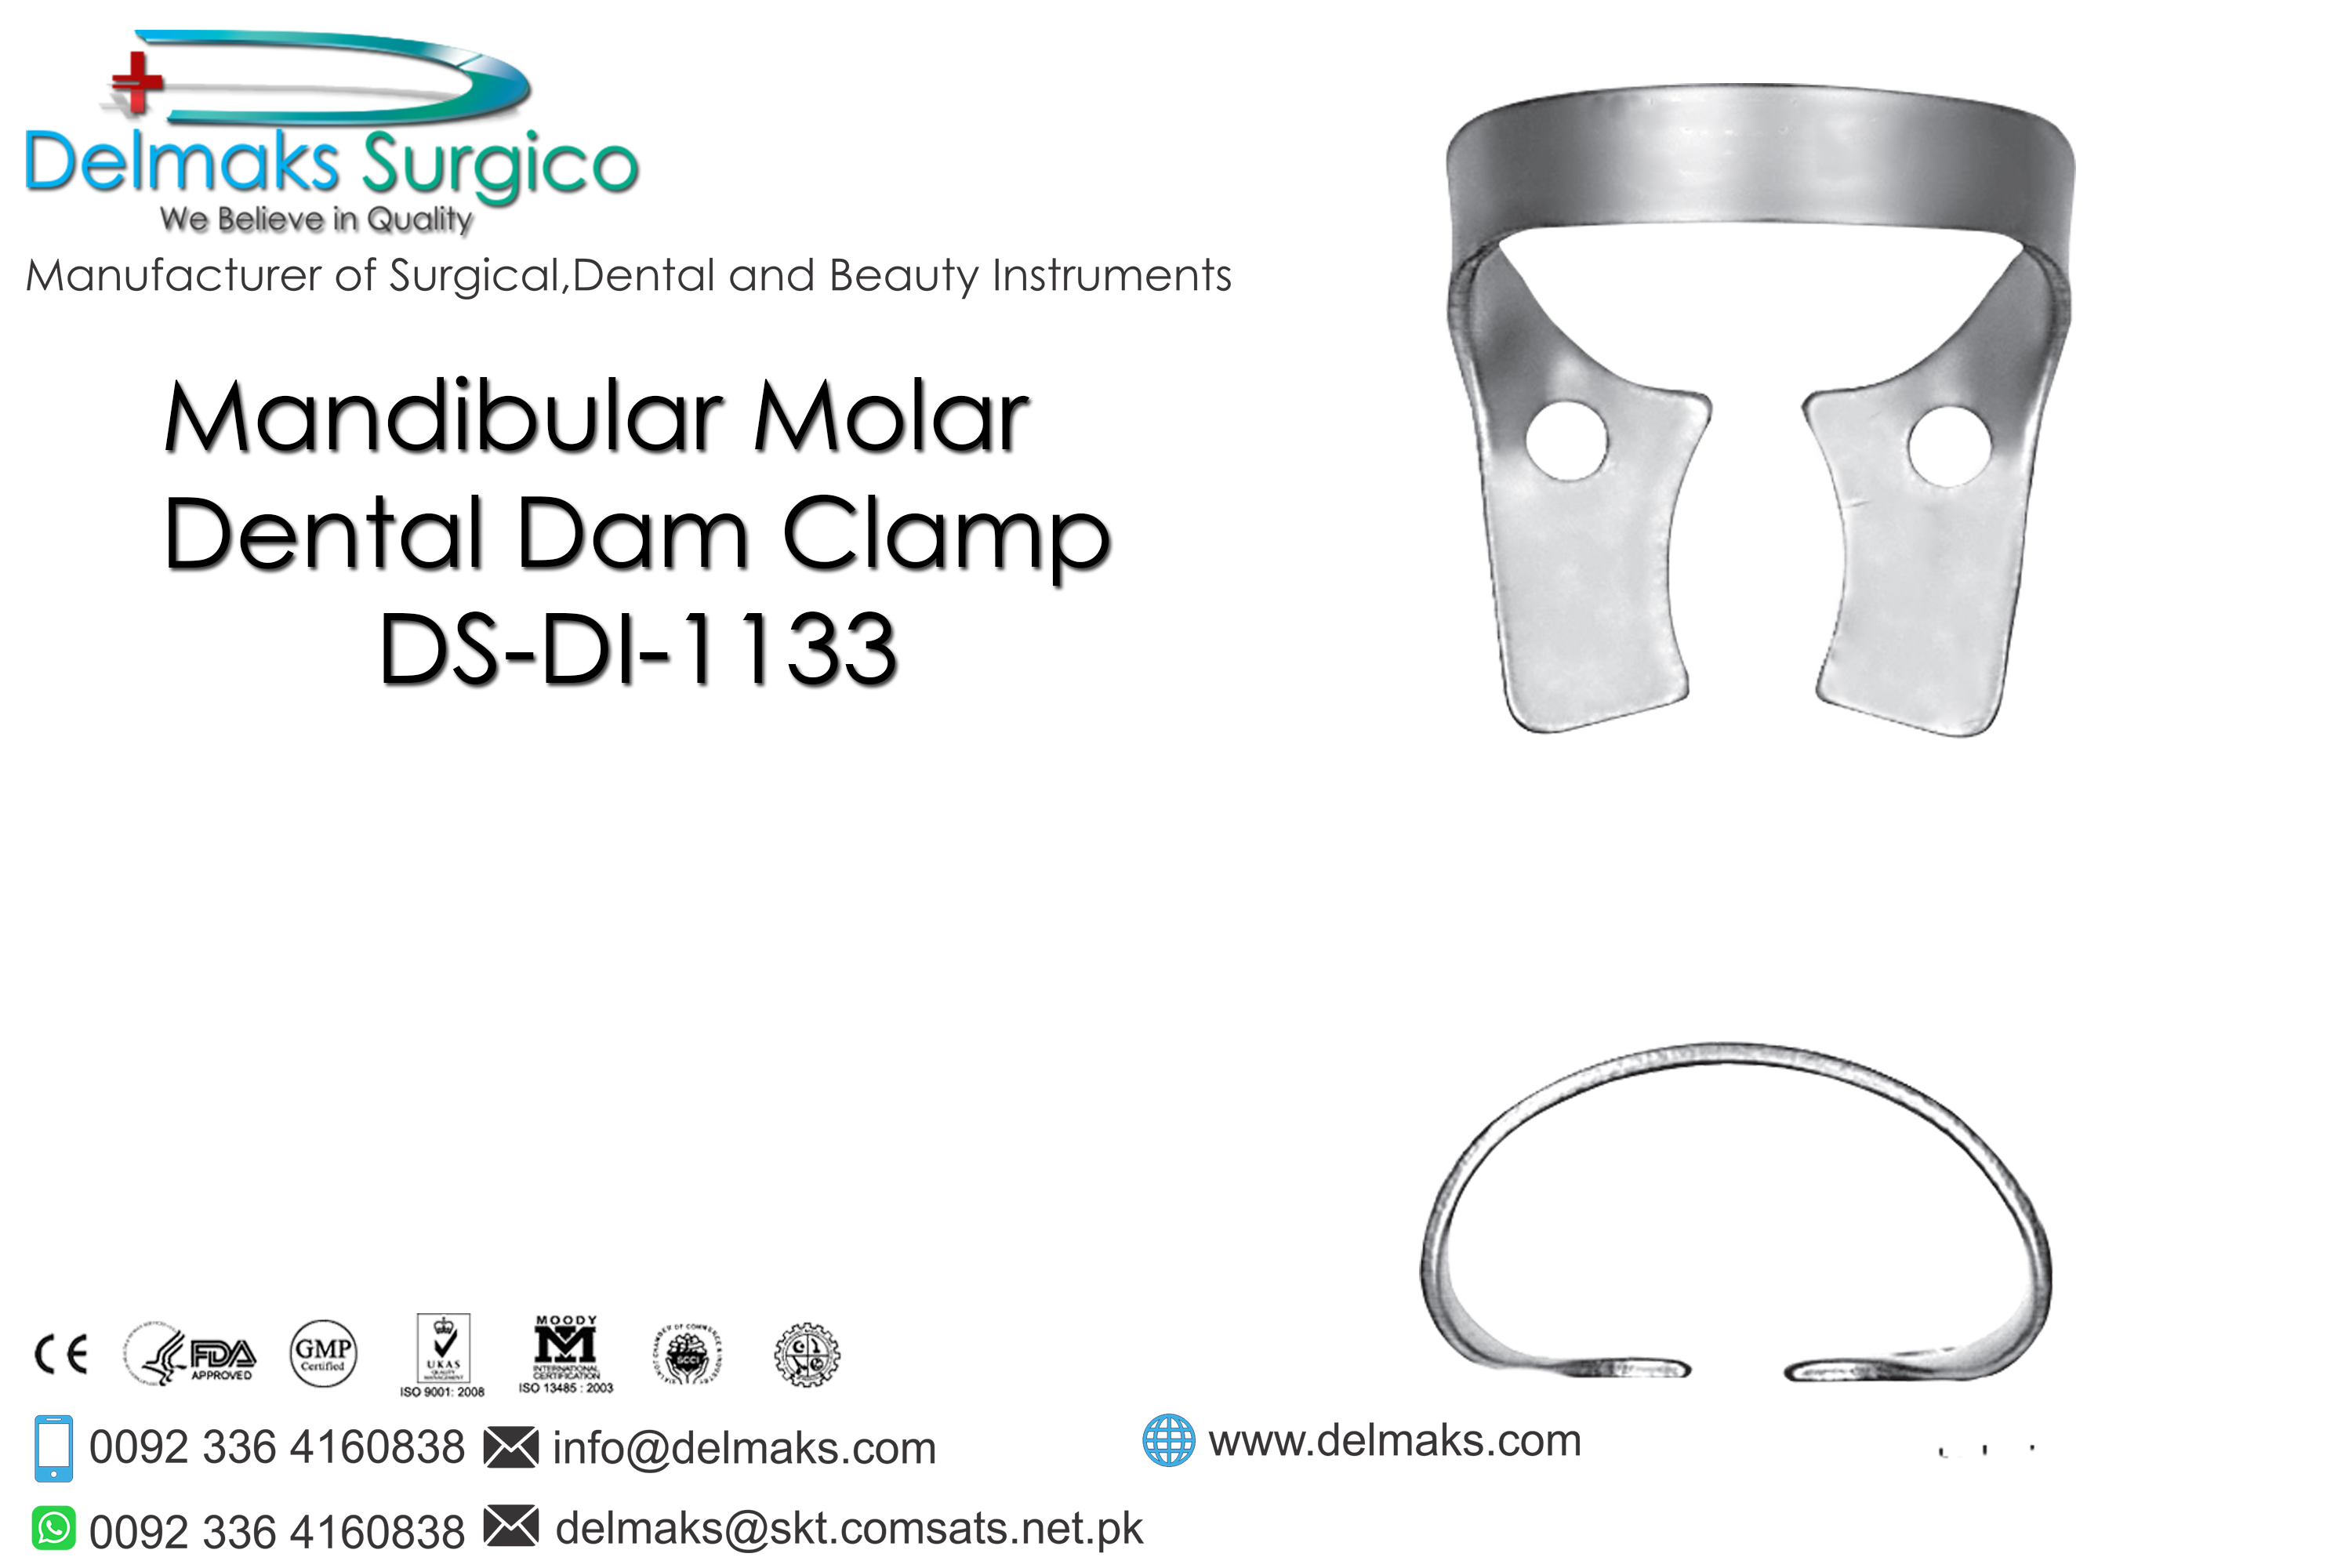 Dental Dam Clamp Forcep-Dental Dam Instruments-Dental Instruments-Delmaks Surgico